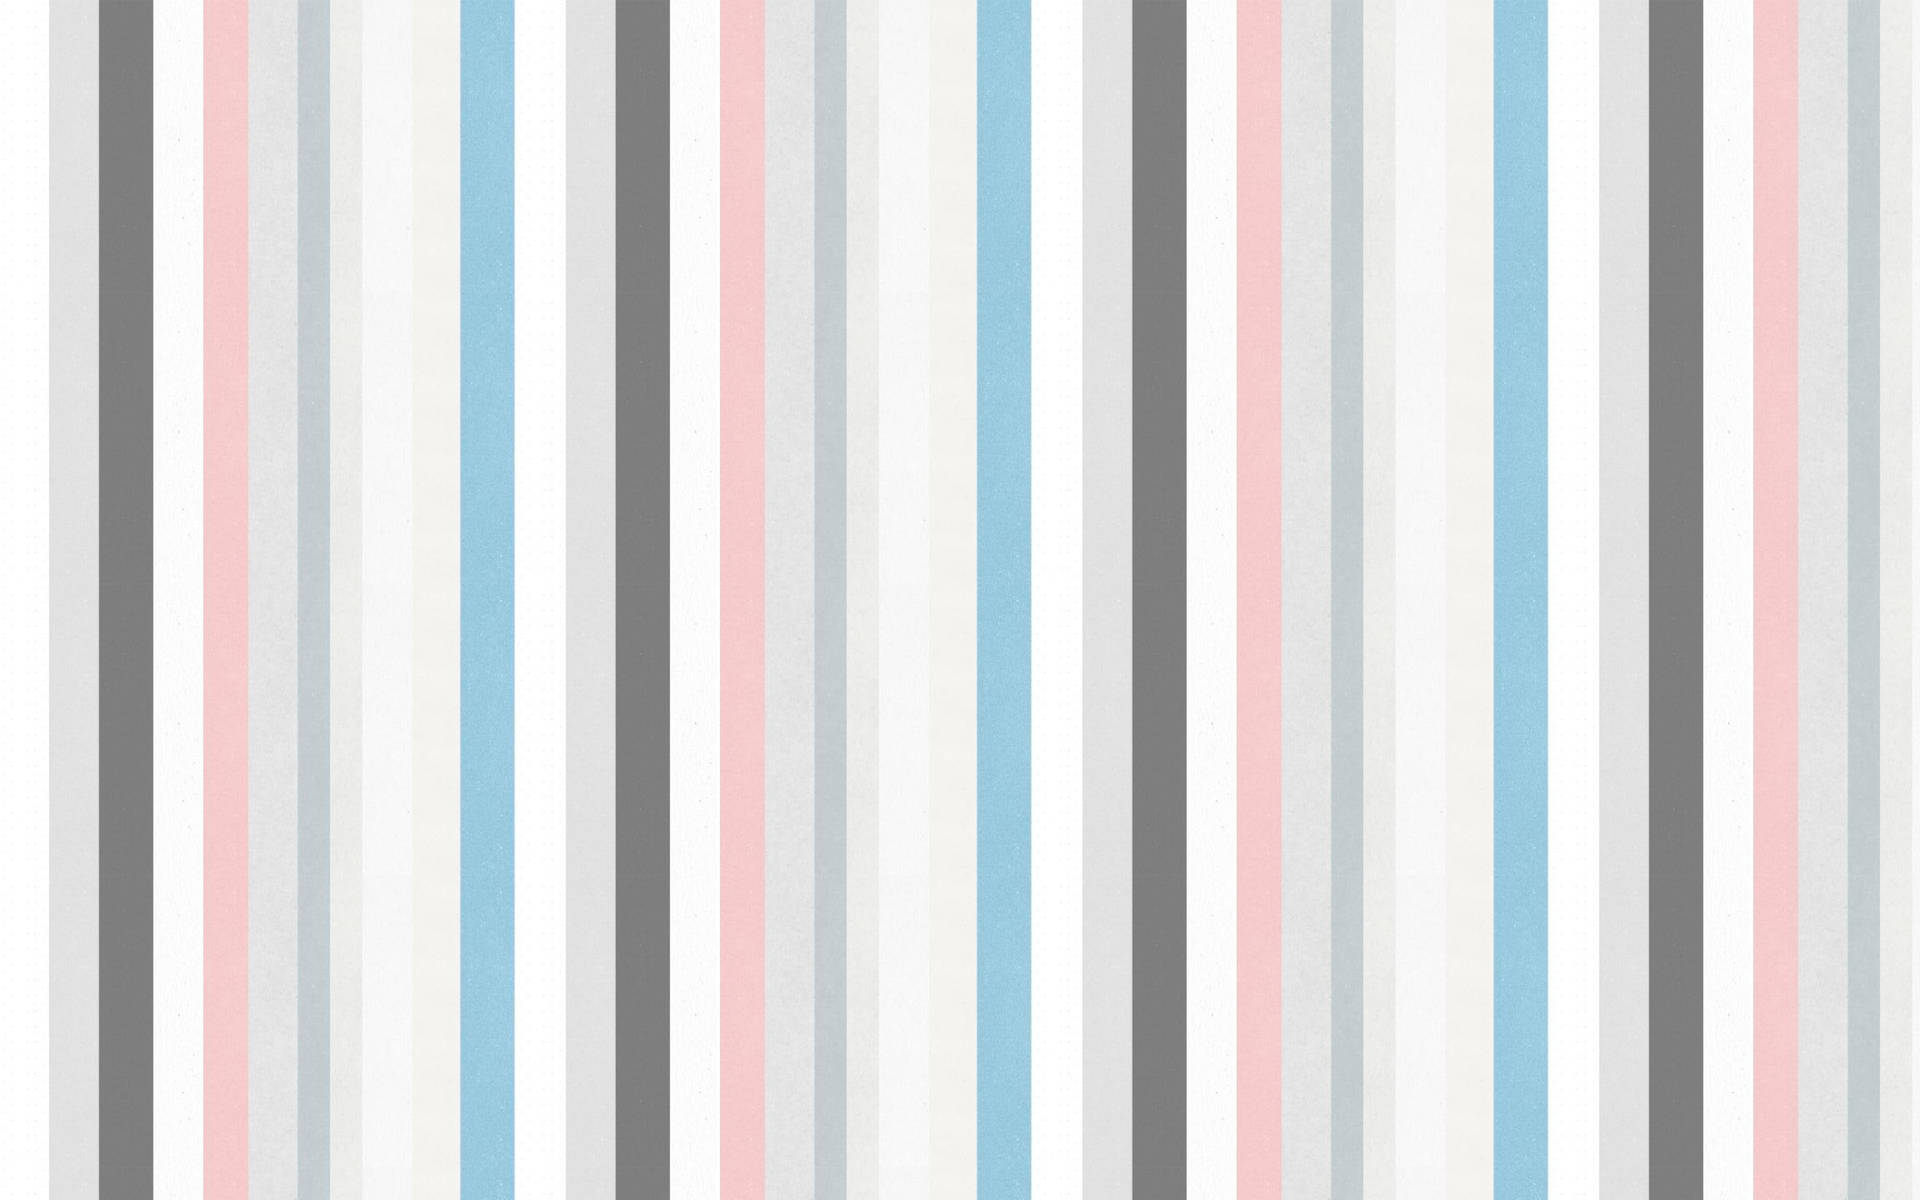 Minimalistiske Linjer I Pastelfarver Wallpaper